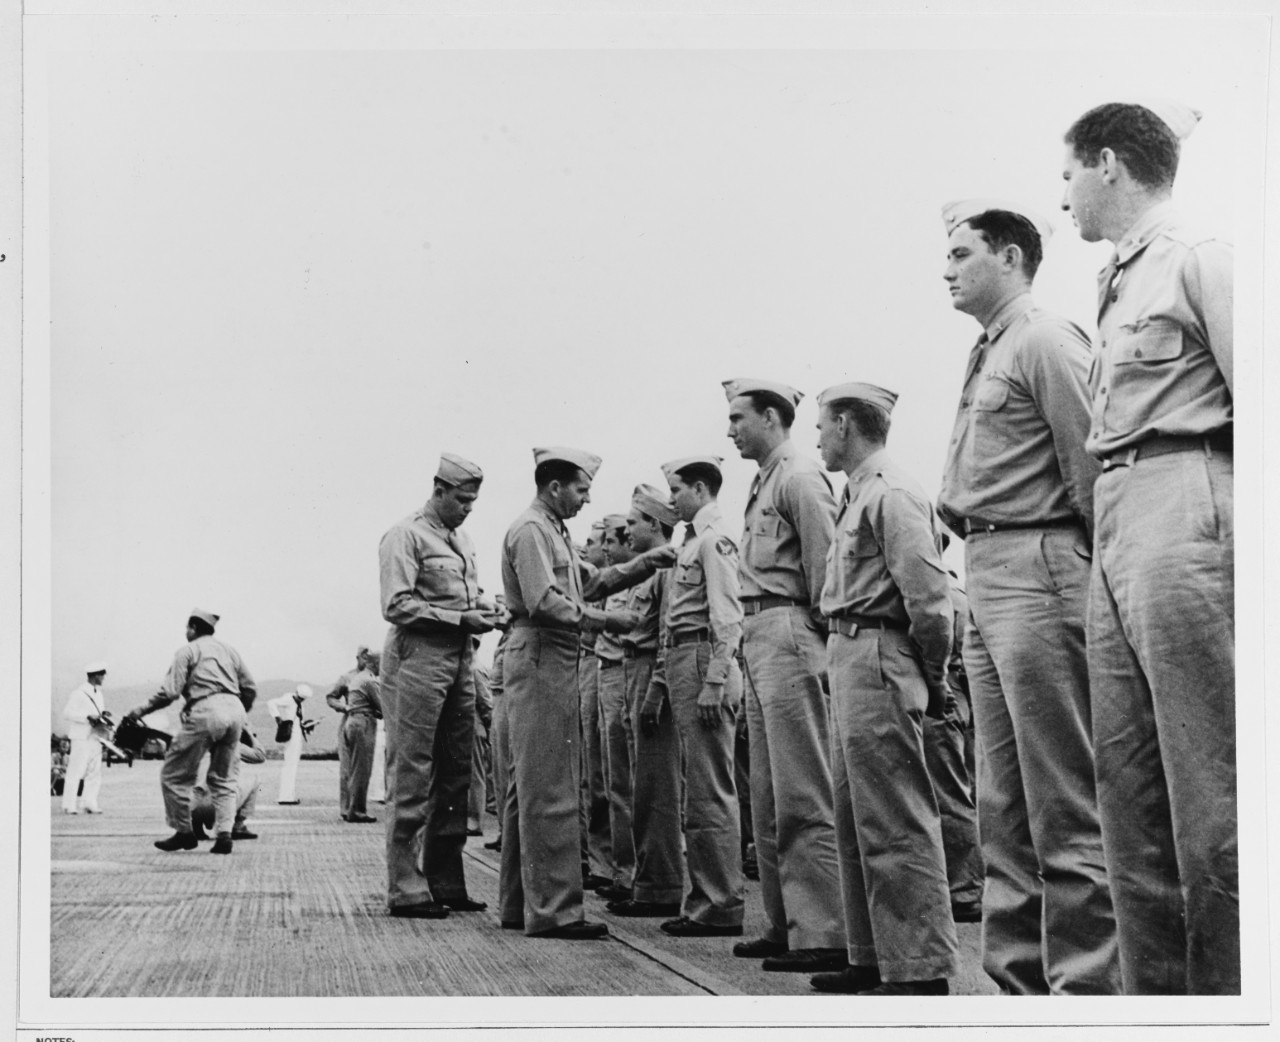 Seventh Air Force at Oahu, Hawaii, April 1944